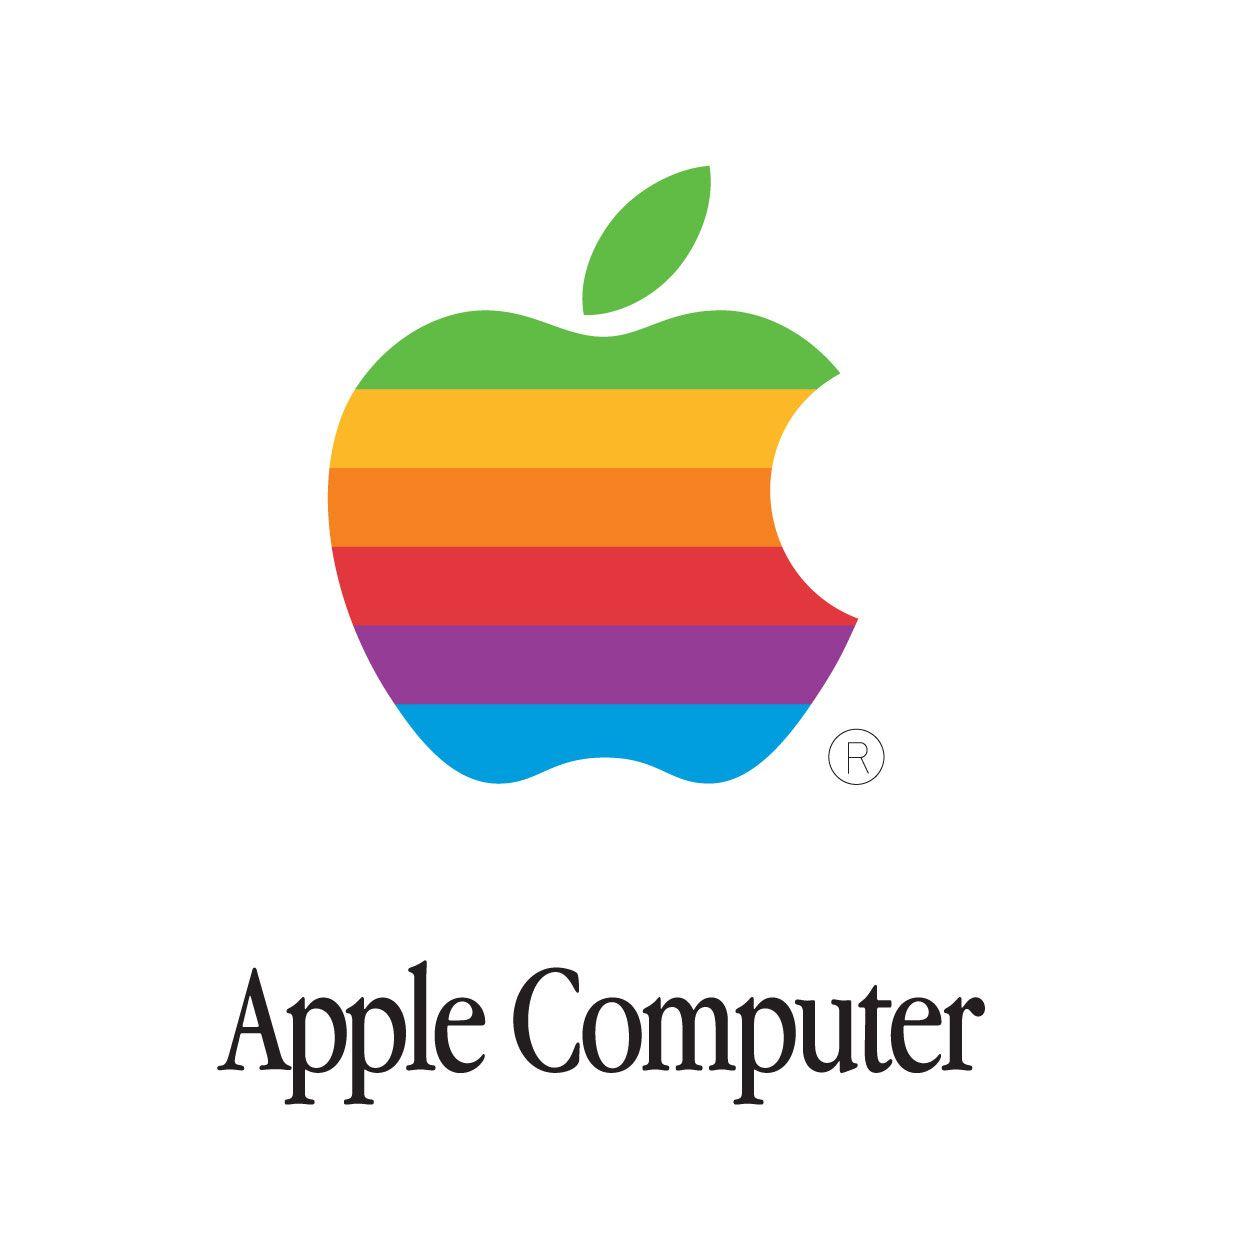 Apple Computer Logo - Old-Apple-Computer-Logo - The Technology Geek